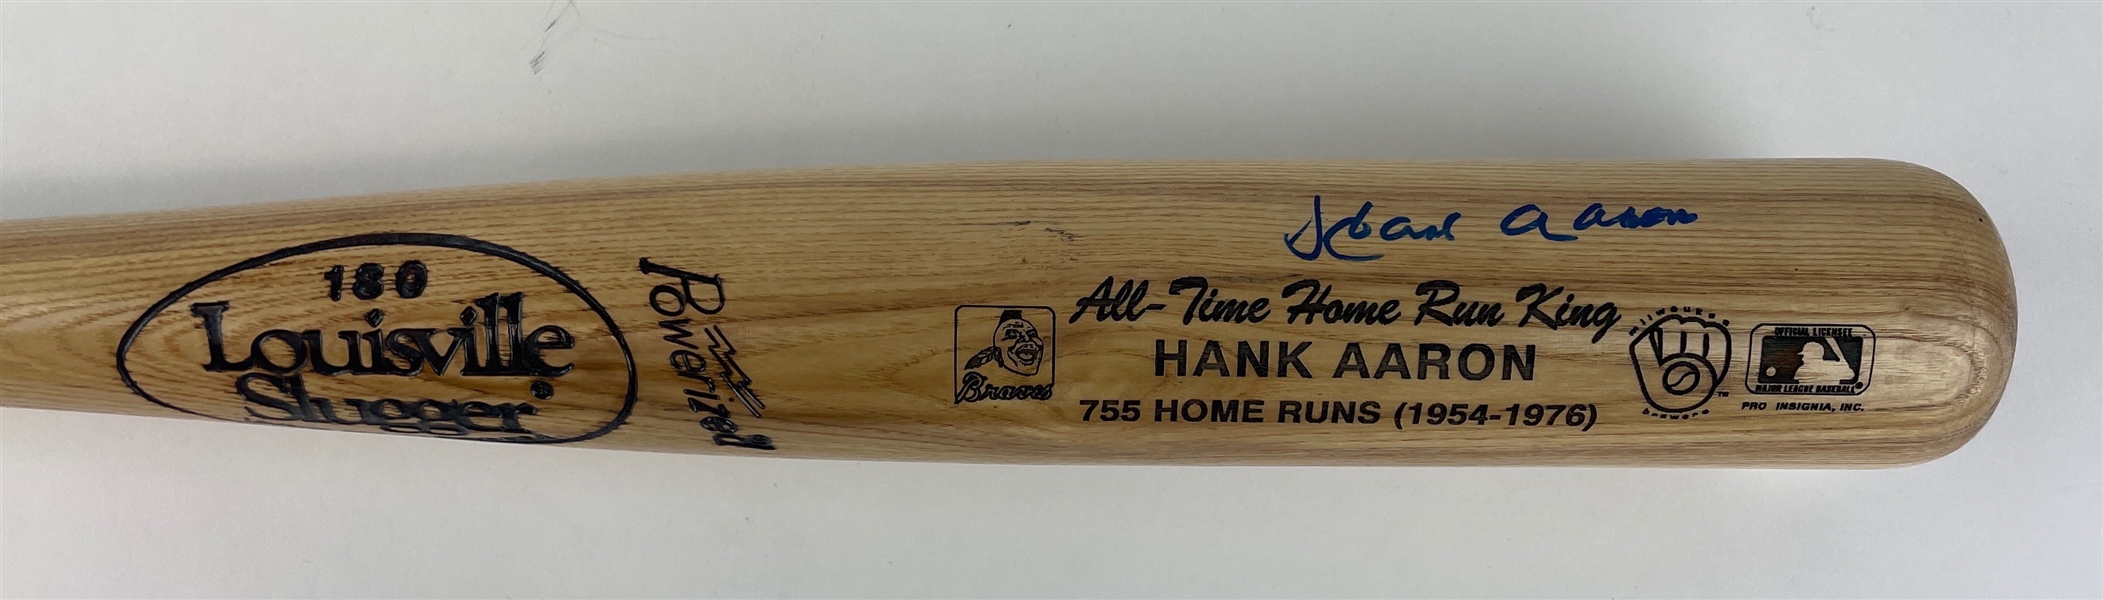 Hank Aaron Signed Louisville Slugger Commemorative Baseball Bat (PSA/DNA)